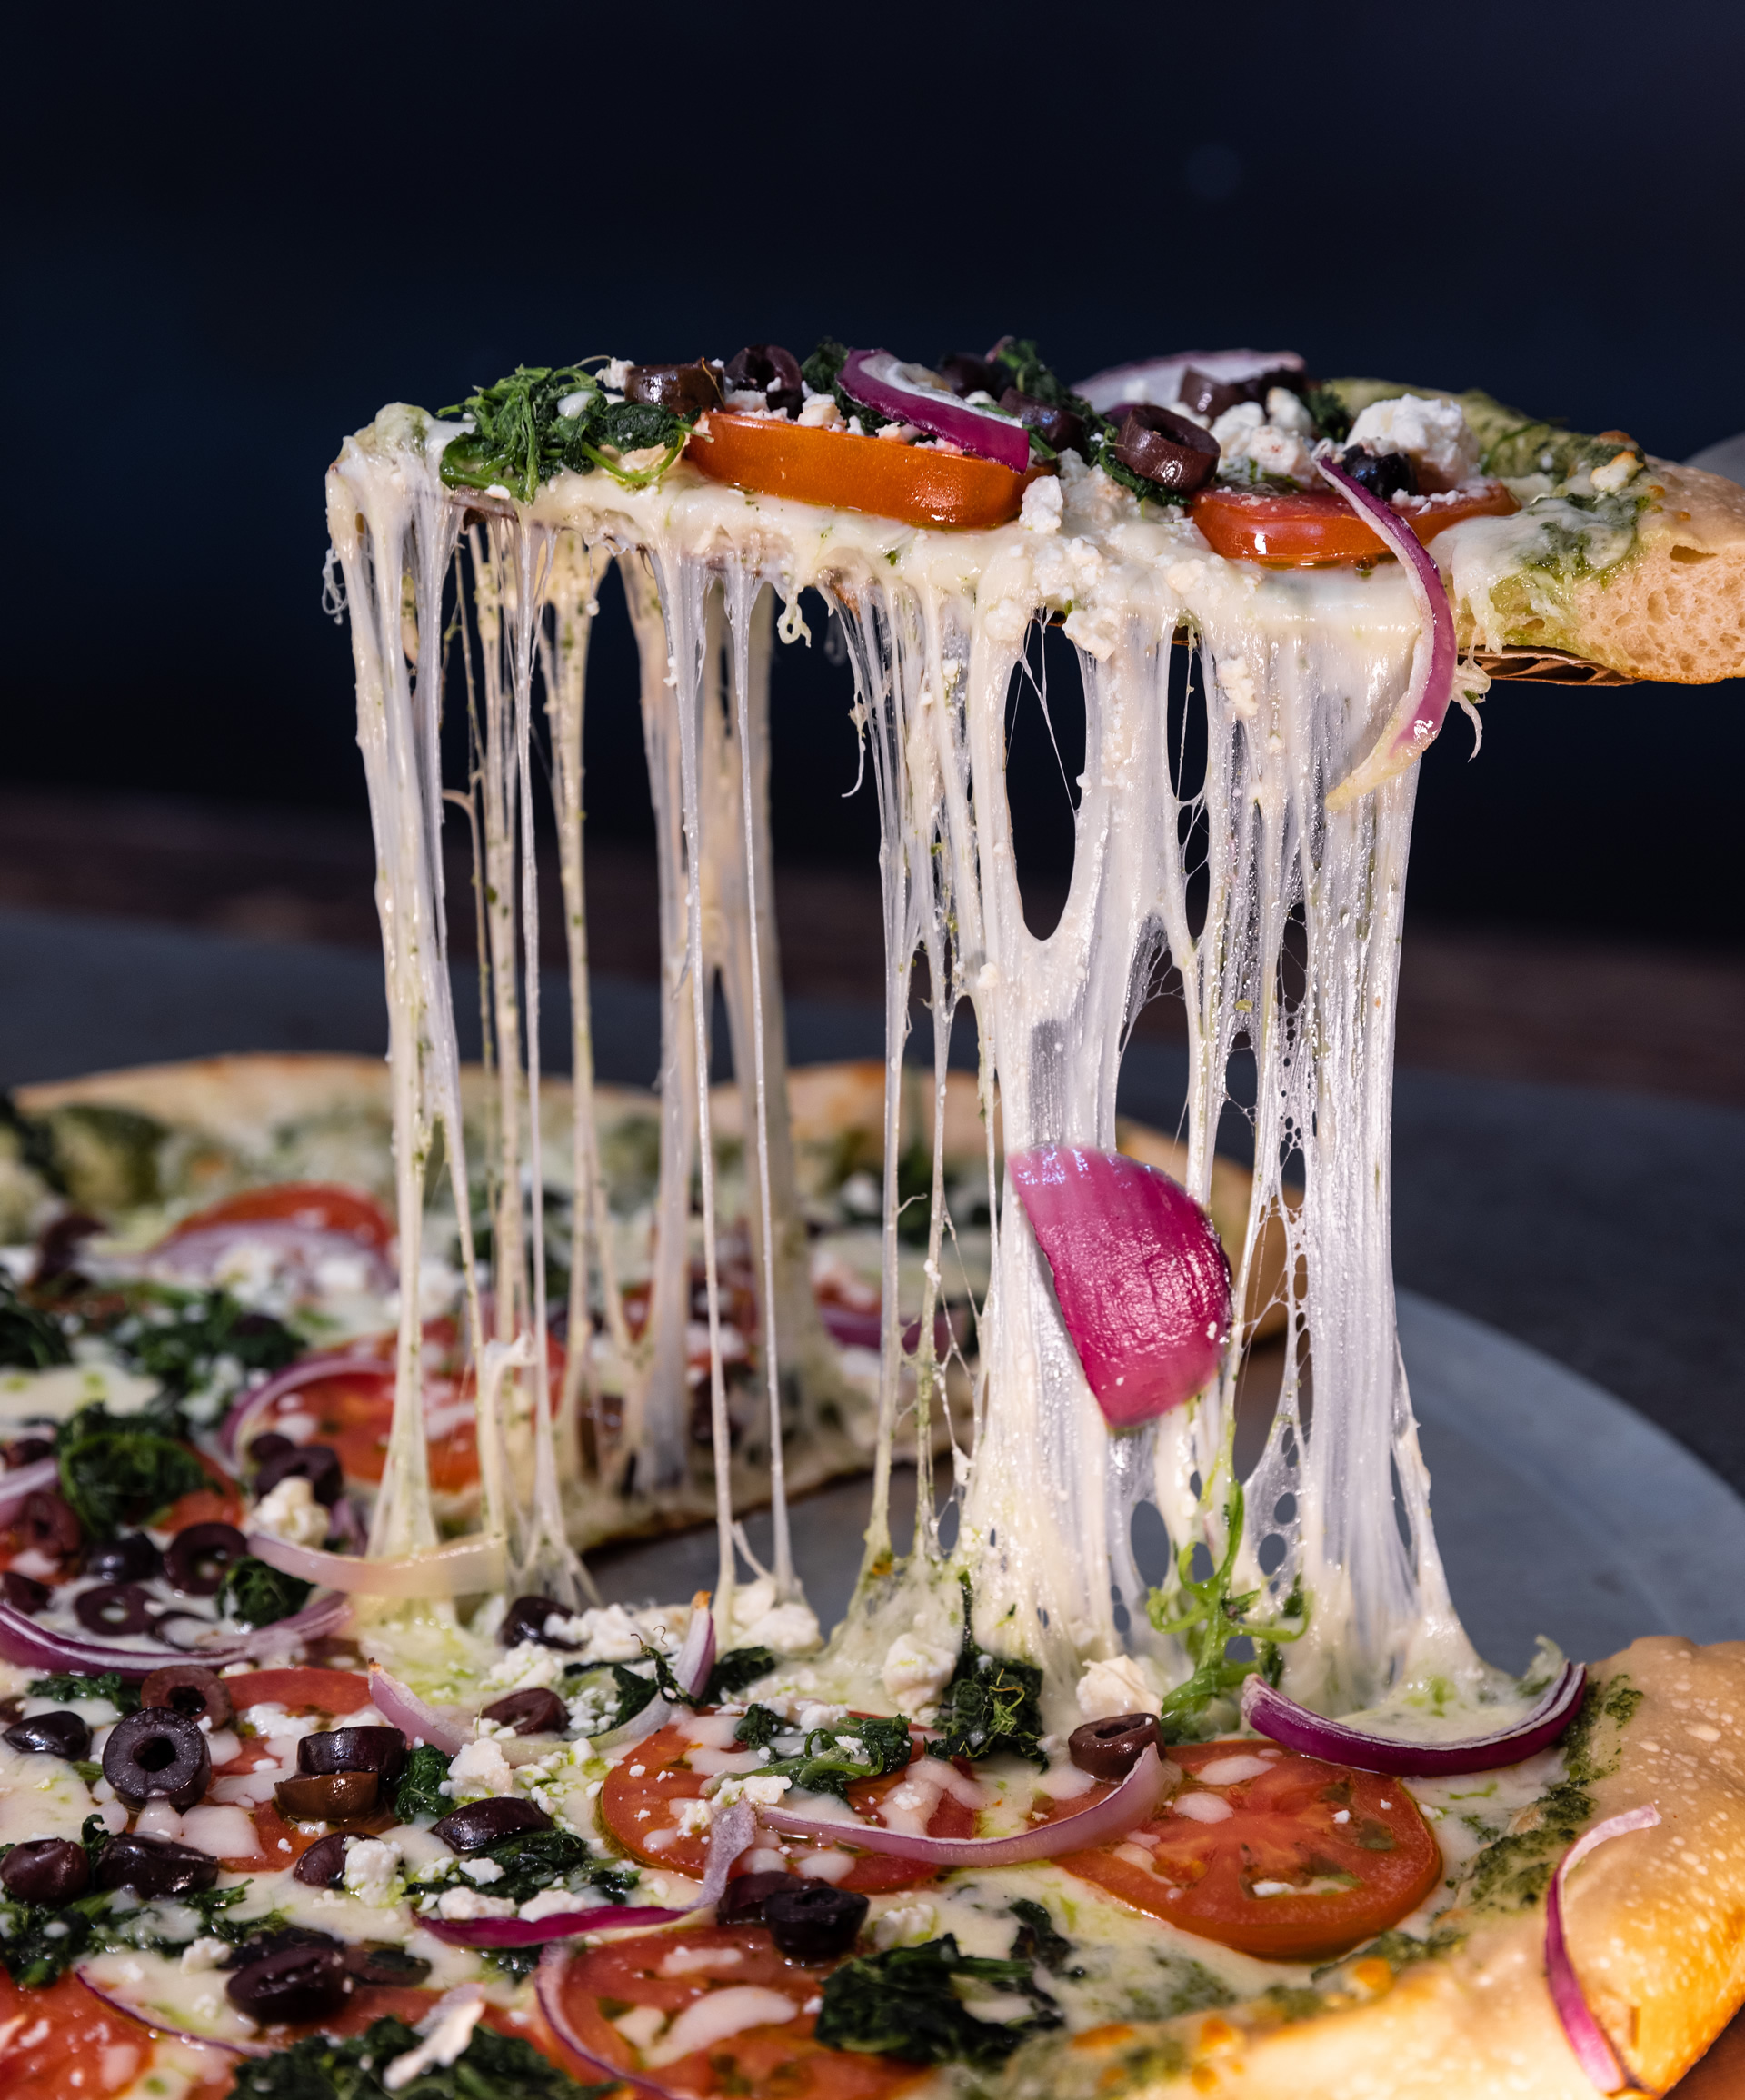 Guidough Pint Glass - Home Slice Pizza